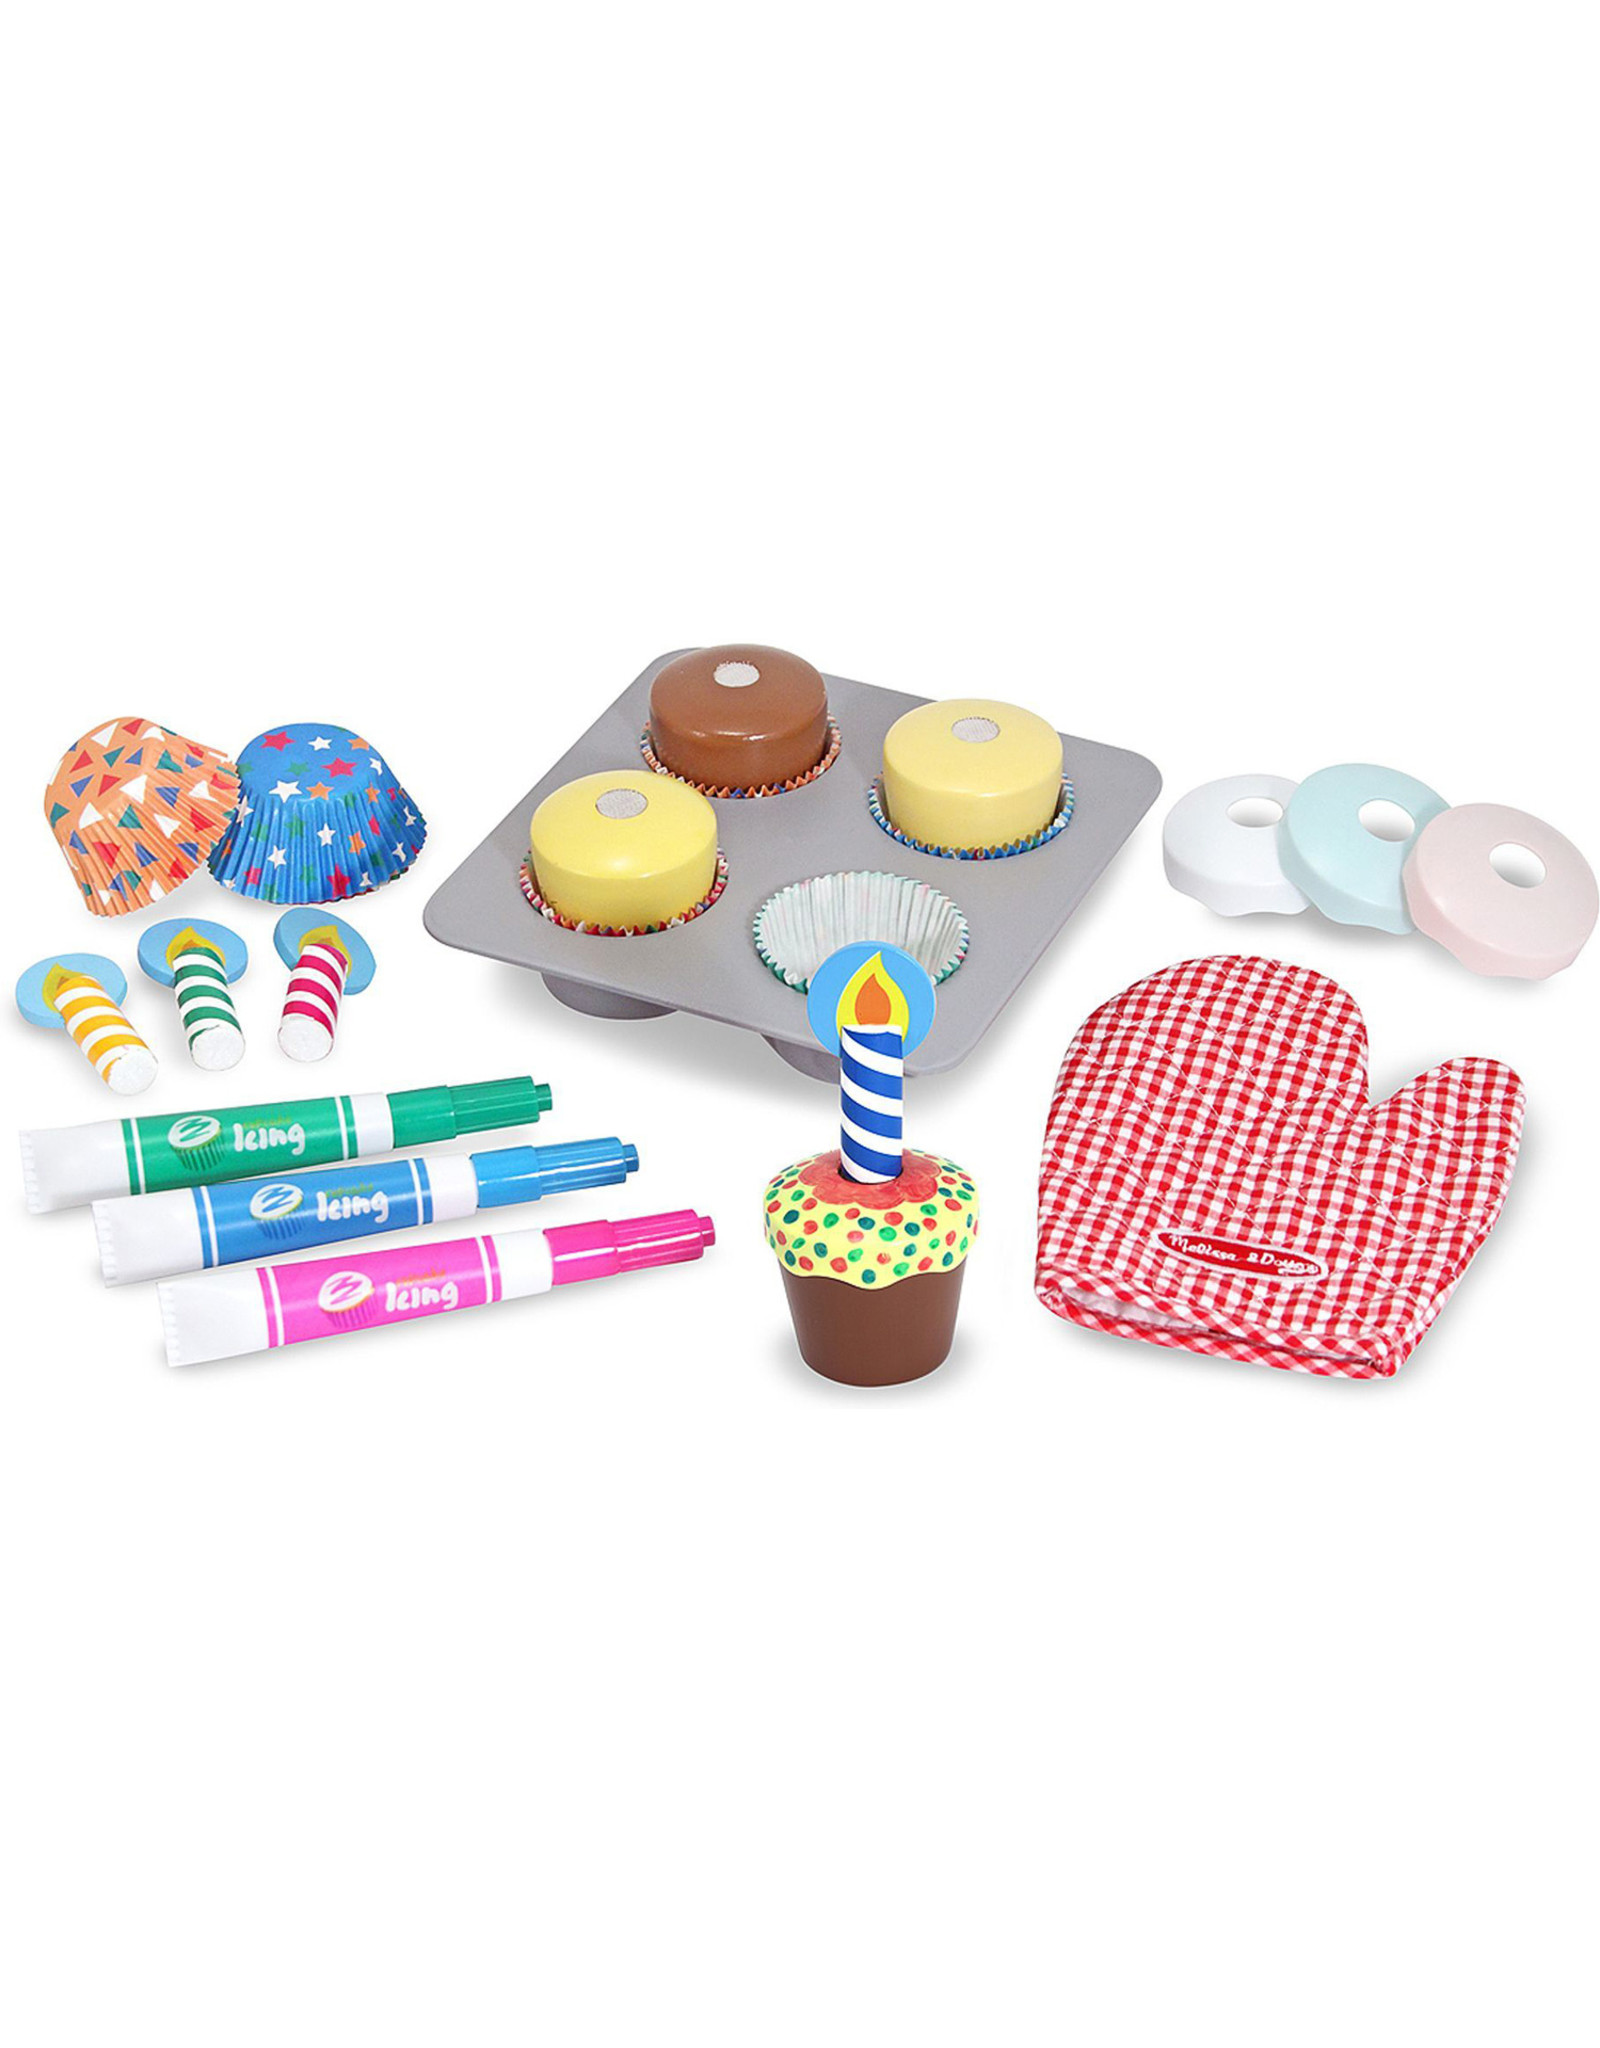 MELISSA & DOUG Bake & Decorate Cupcake Set